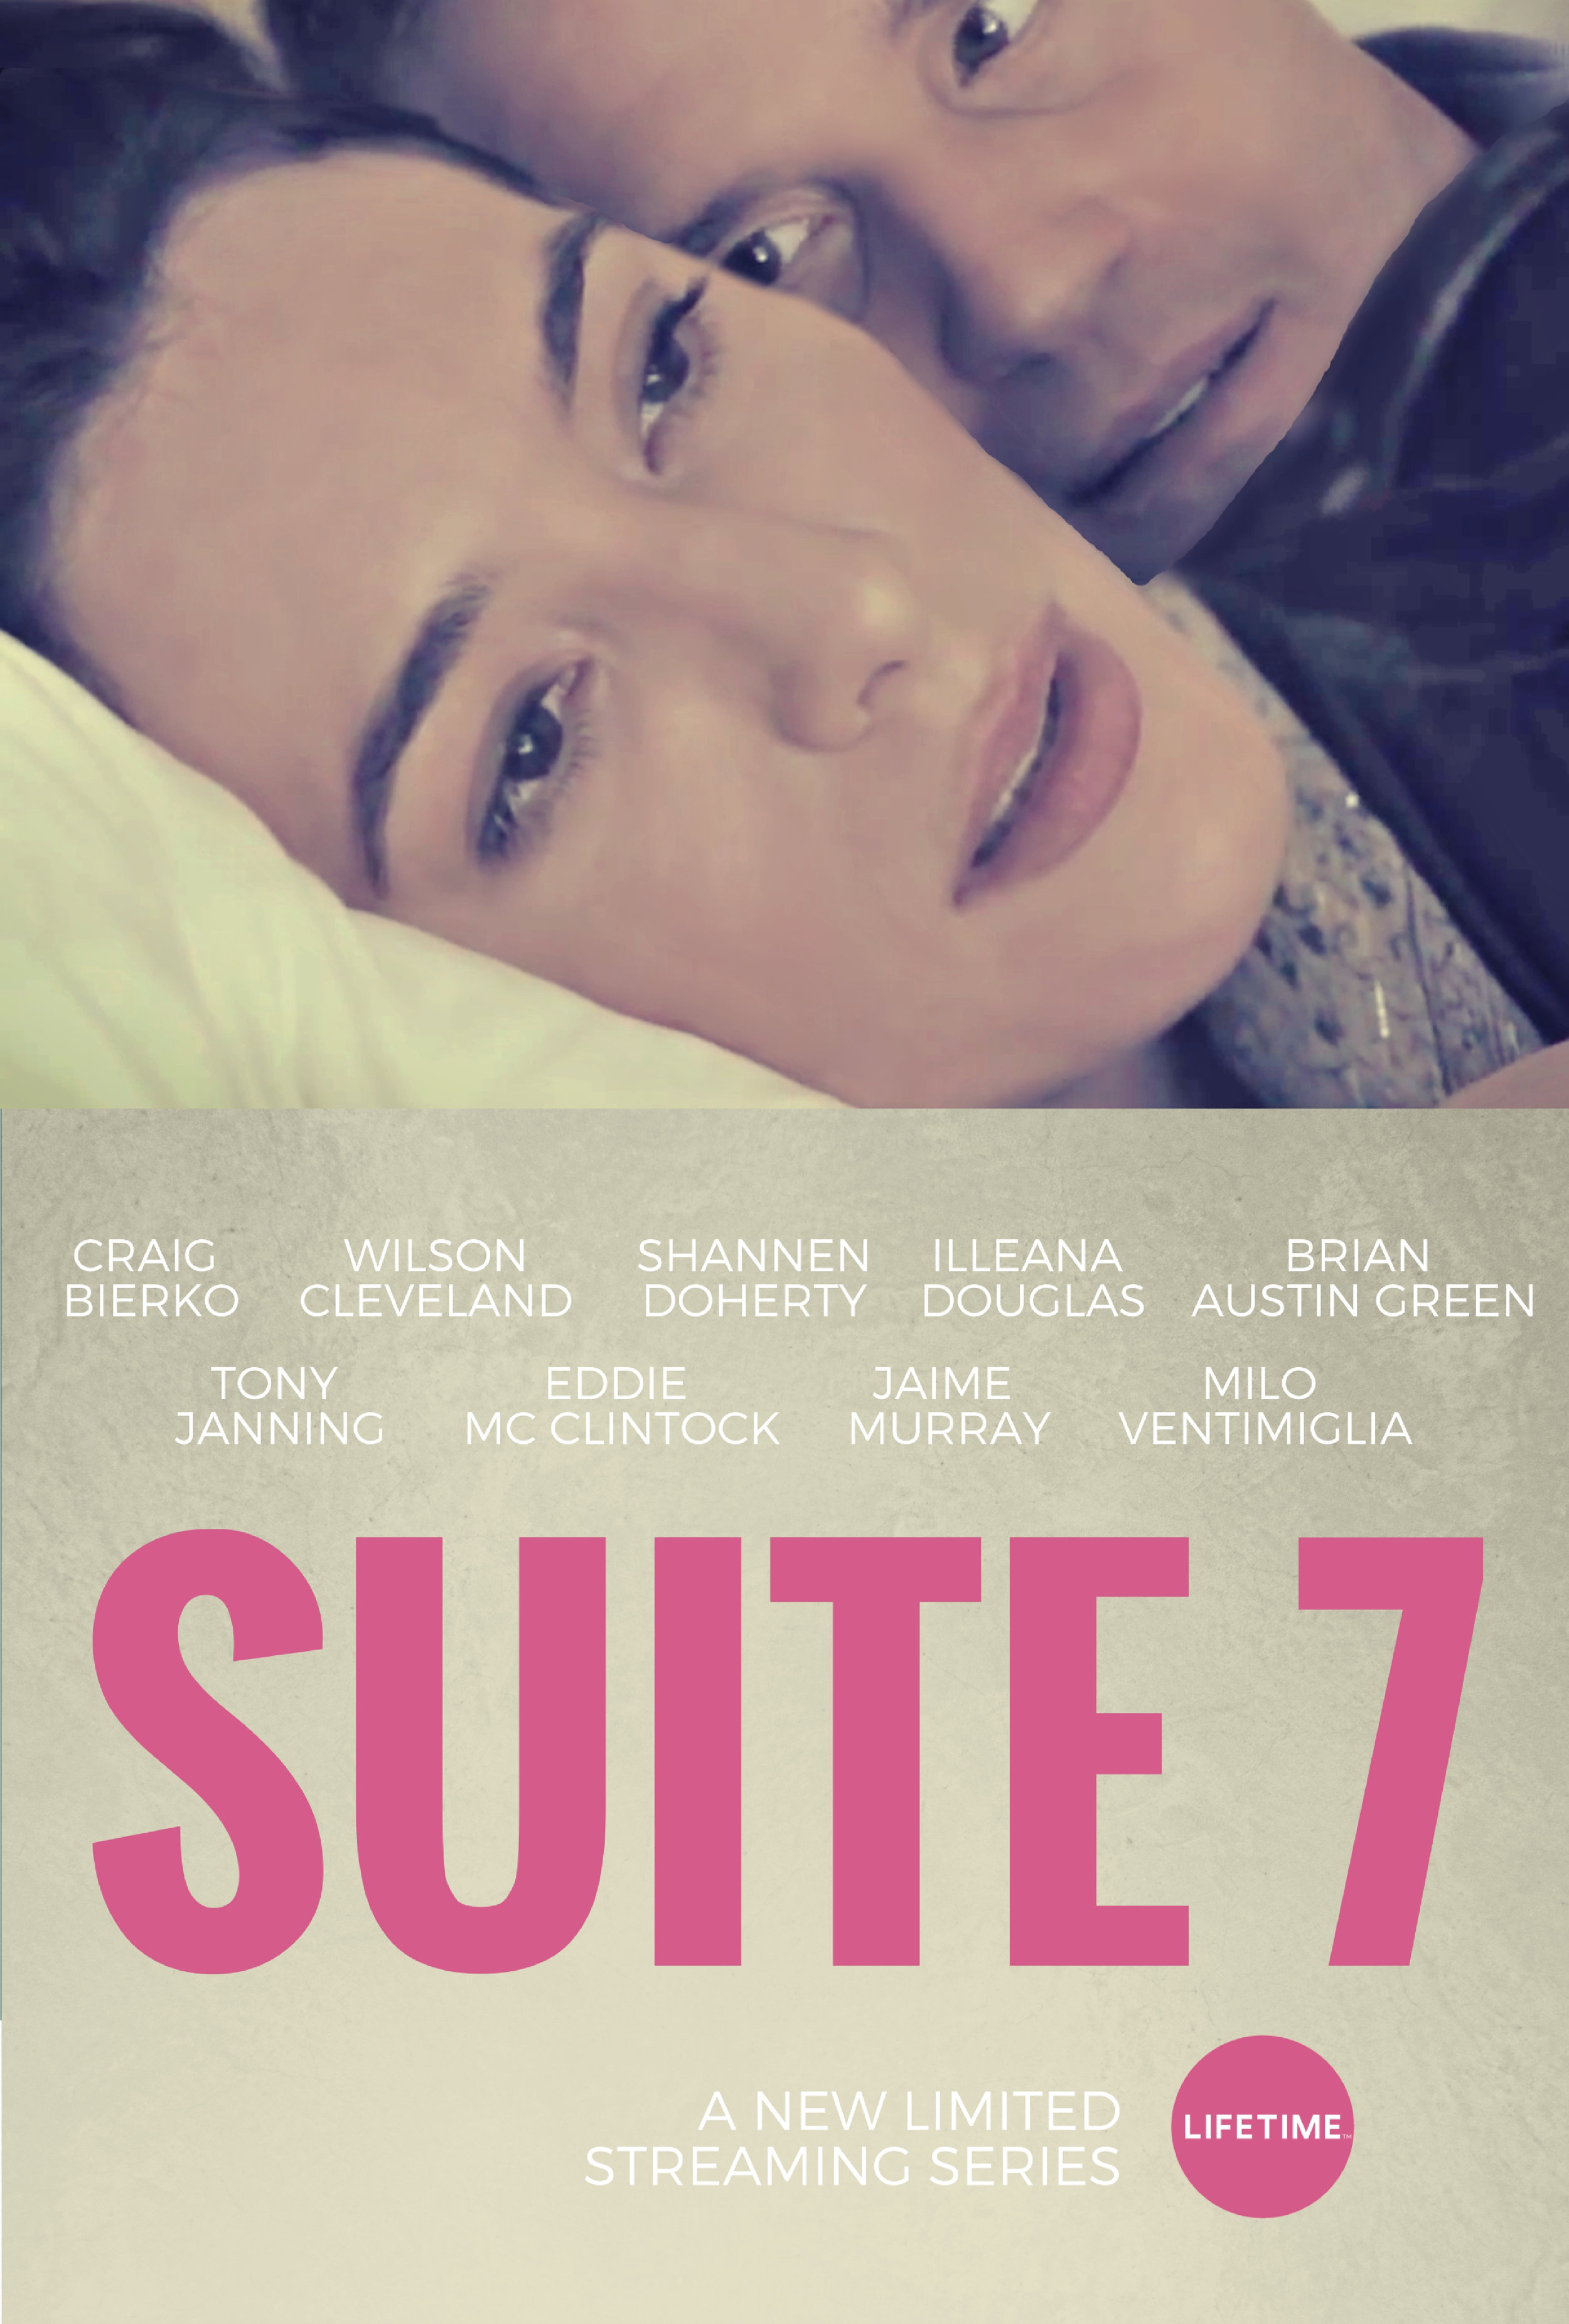 suite 7 poster-imdb.jpg